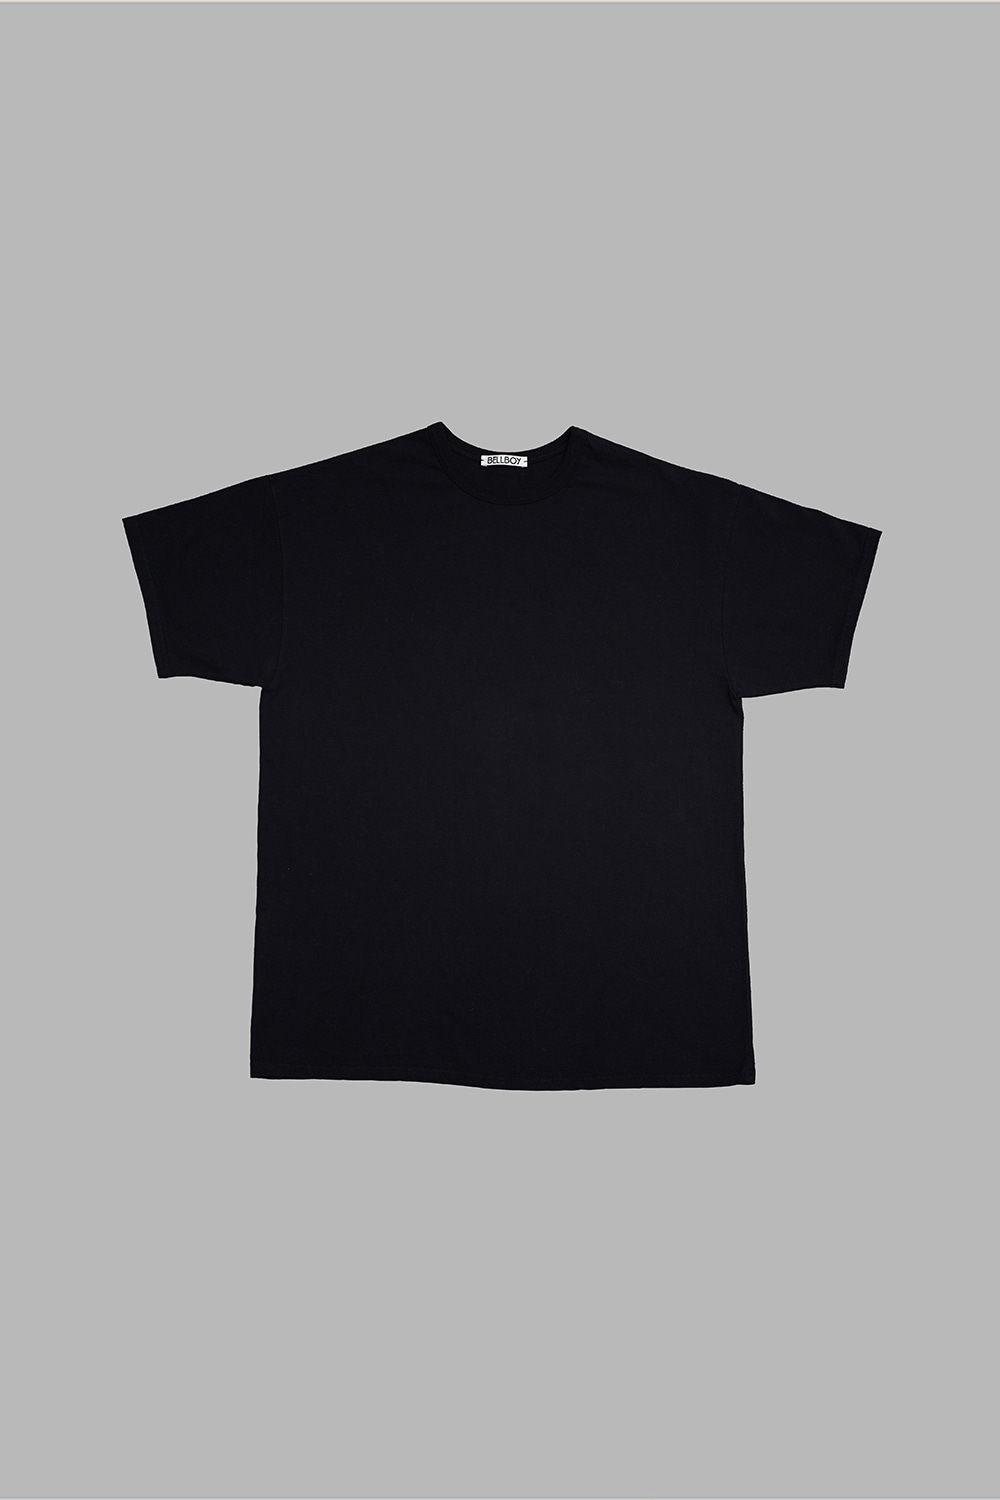 Washed Mid Weight T-Shirts - Agent 티셔츠, 워시드 헤비웨이트 티셔츠, 옥스포드셔츠, 버튼다운셔츠, 메신저백, 캔버스백